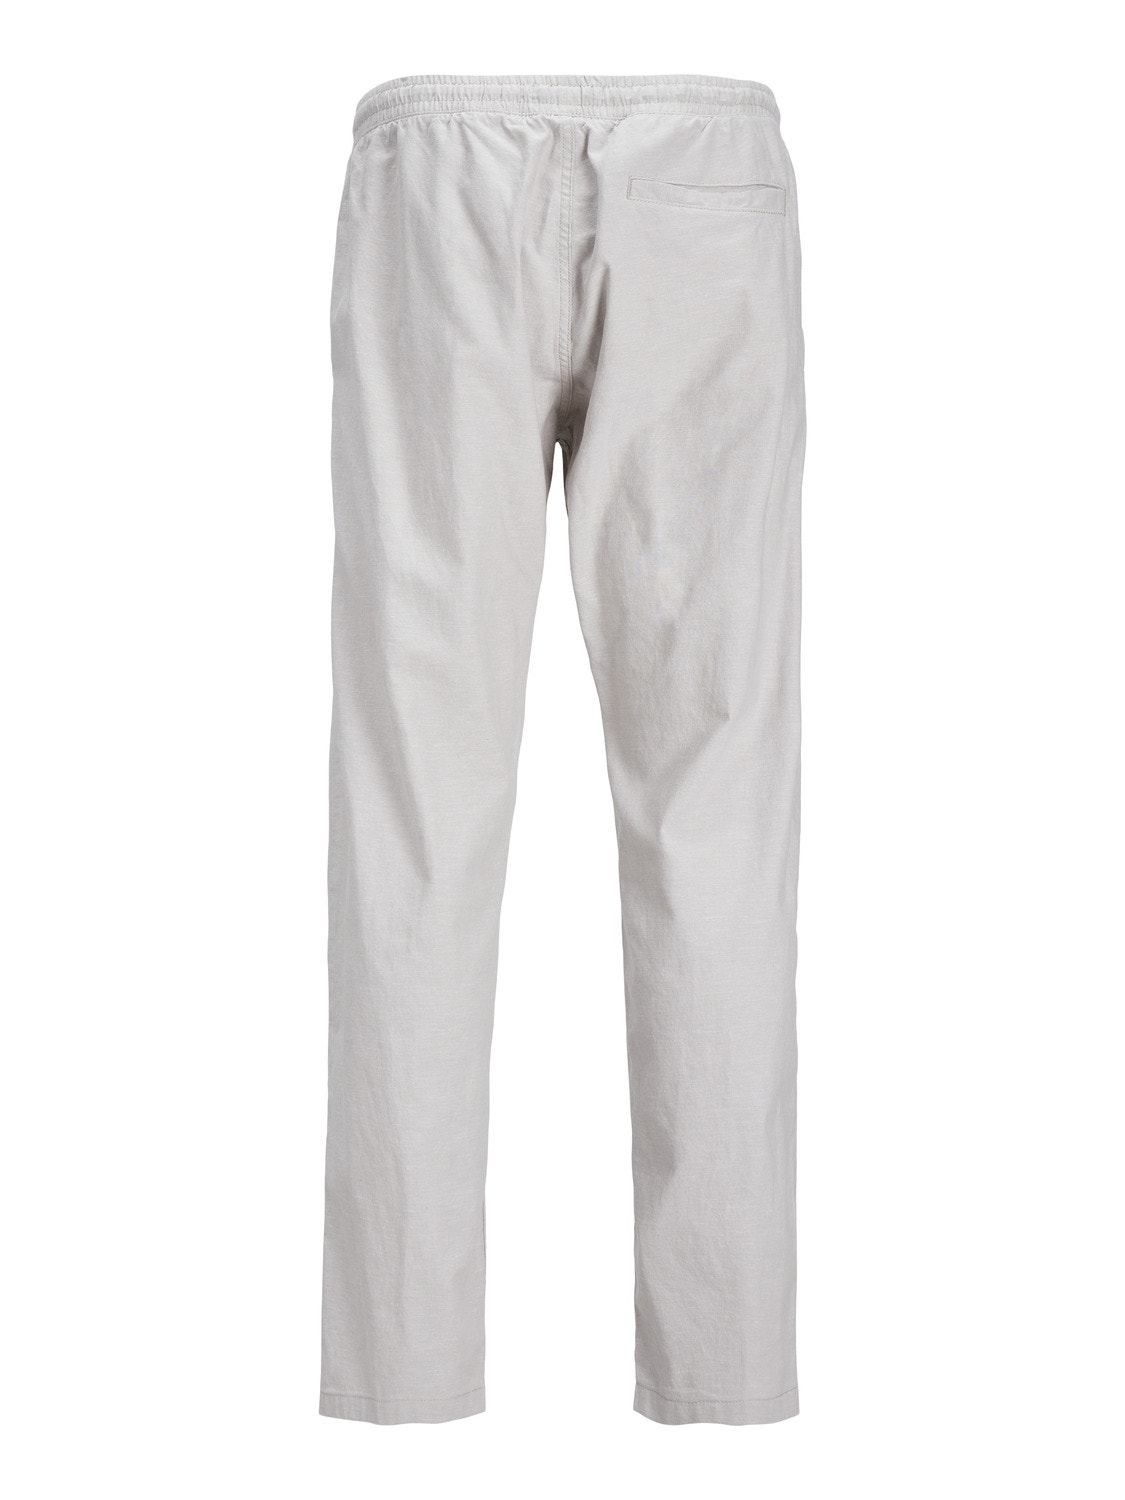 Jack & Jones Relaxed Fit Classic trousers -Crockery - 12248606